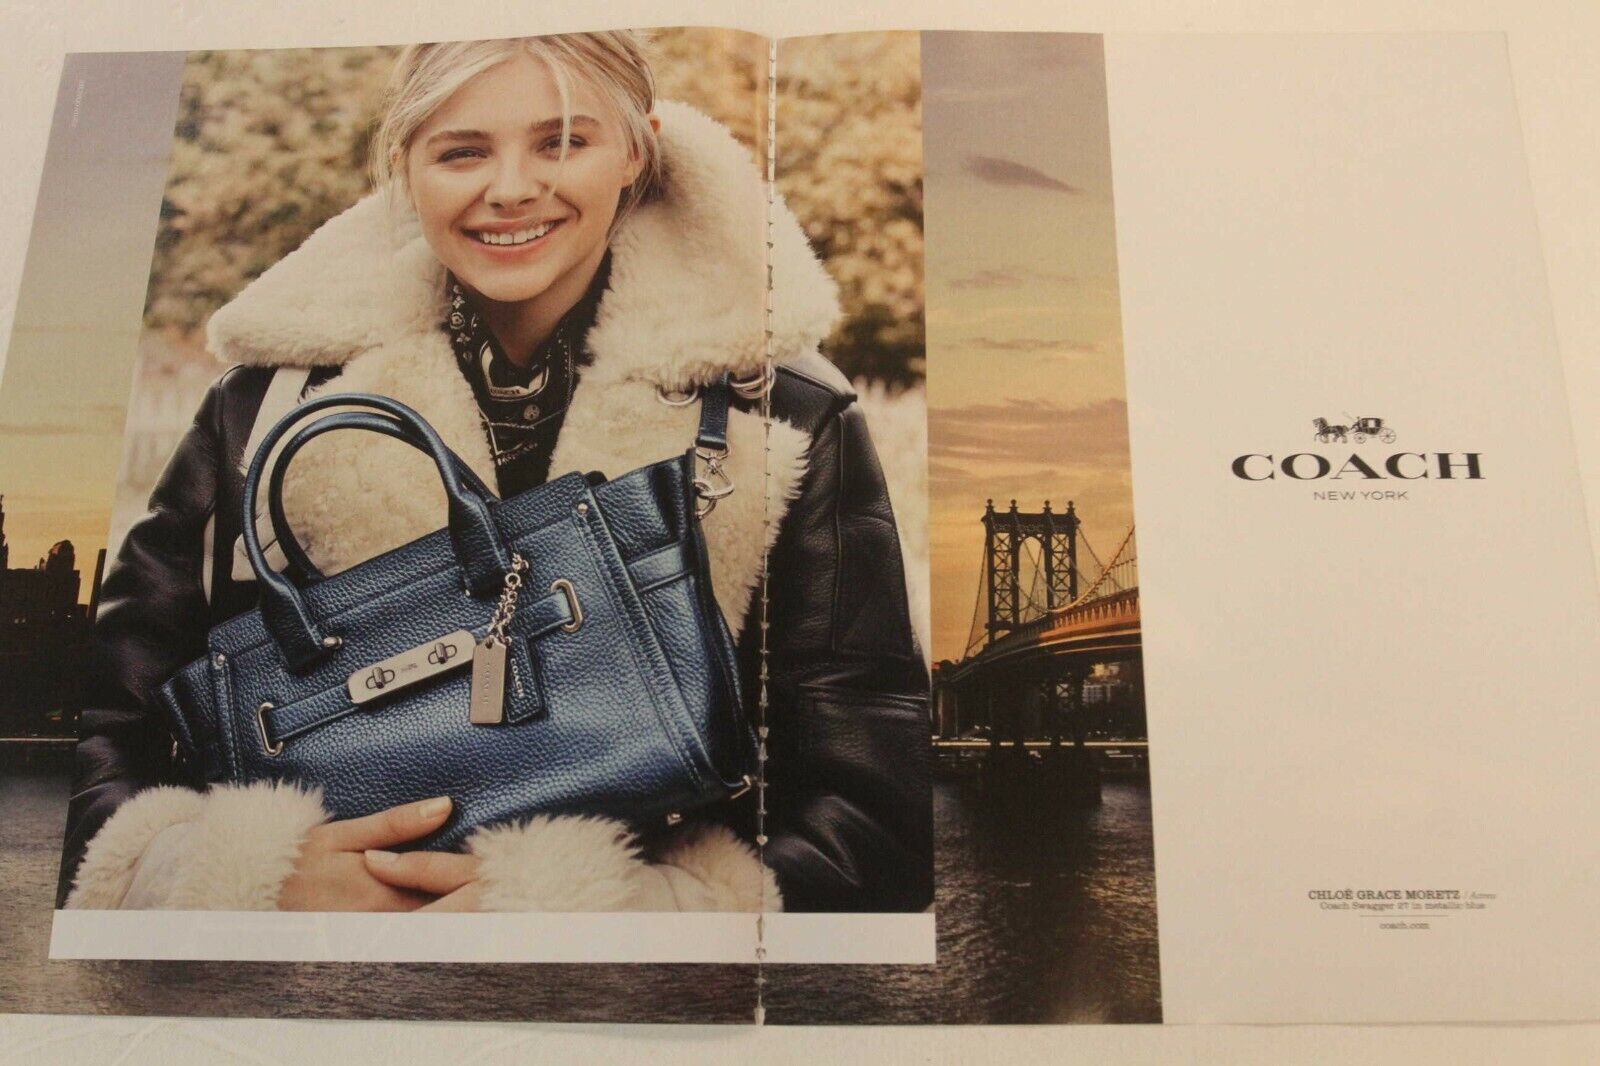 COACH Magazine Print Ad Advert Chloe Grace Moretz Leather Handbag 2pg 2015 